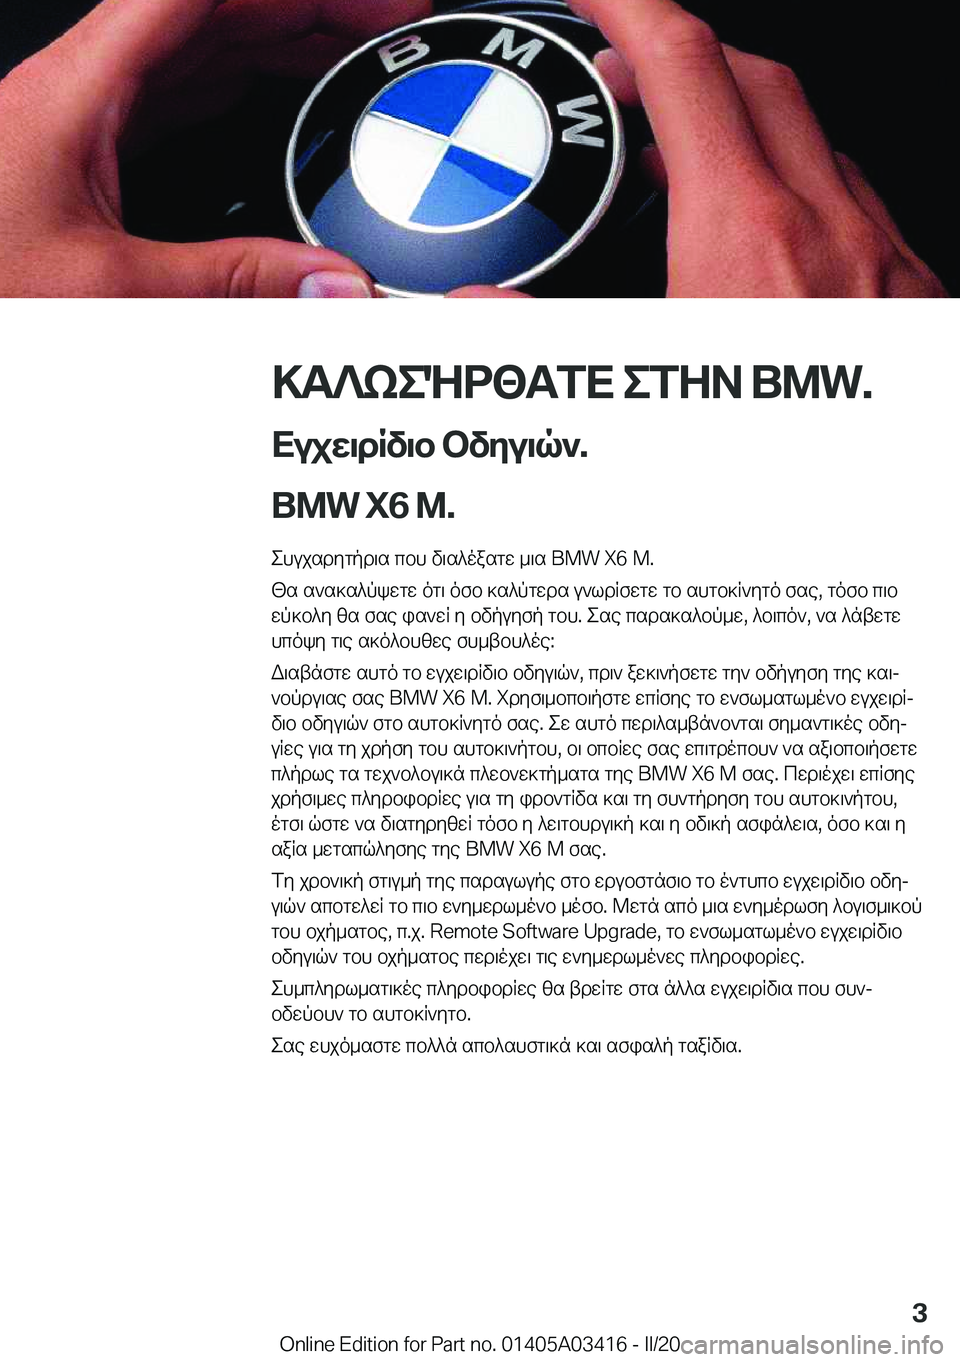 BMW X6 M 2020  ΟΔΗΓΌΣ ΧΡΉΣΗΣ (in Greek) >T?keNd<TfX�efZA��B�M�W�.
Xujw\dRv\b�bvyu\q`�.
�B�M�W��X�6��M�. ehujsdygpd\s�cbh�v\s^oasgw�_\s��B�M�W��X�6��M�.
[s�s`s]s^